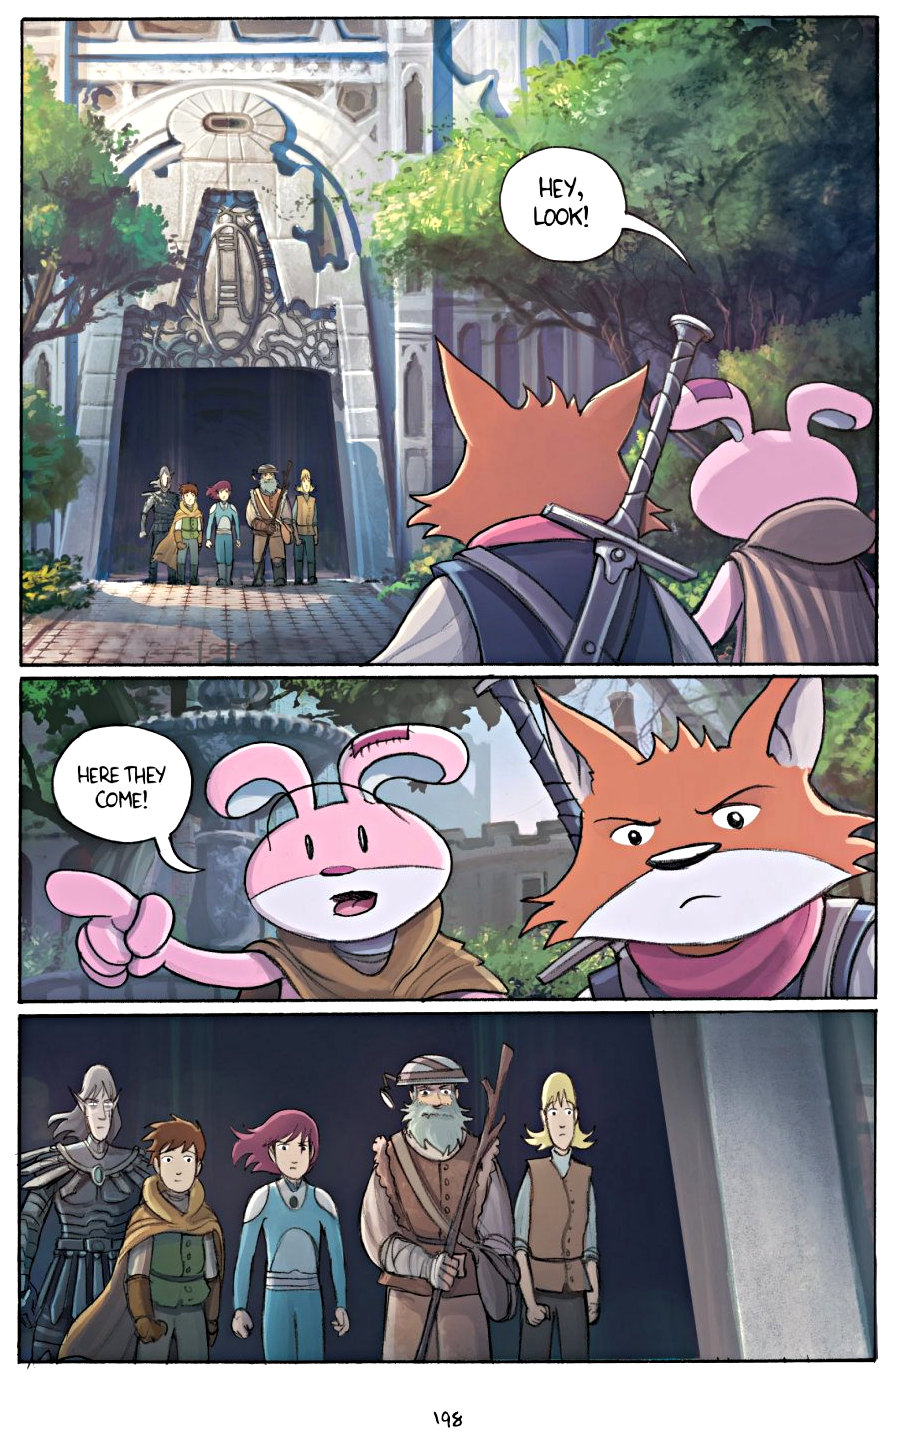 page 198 of amulet 4 last council graphic novel by kazu kibuishi